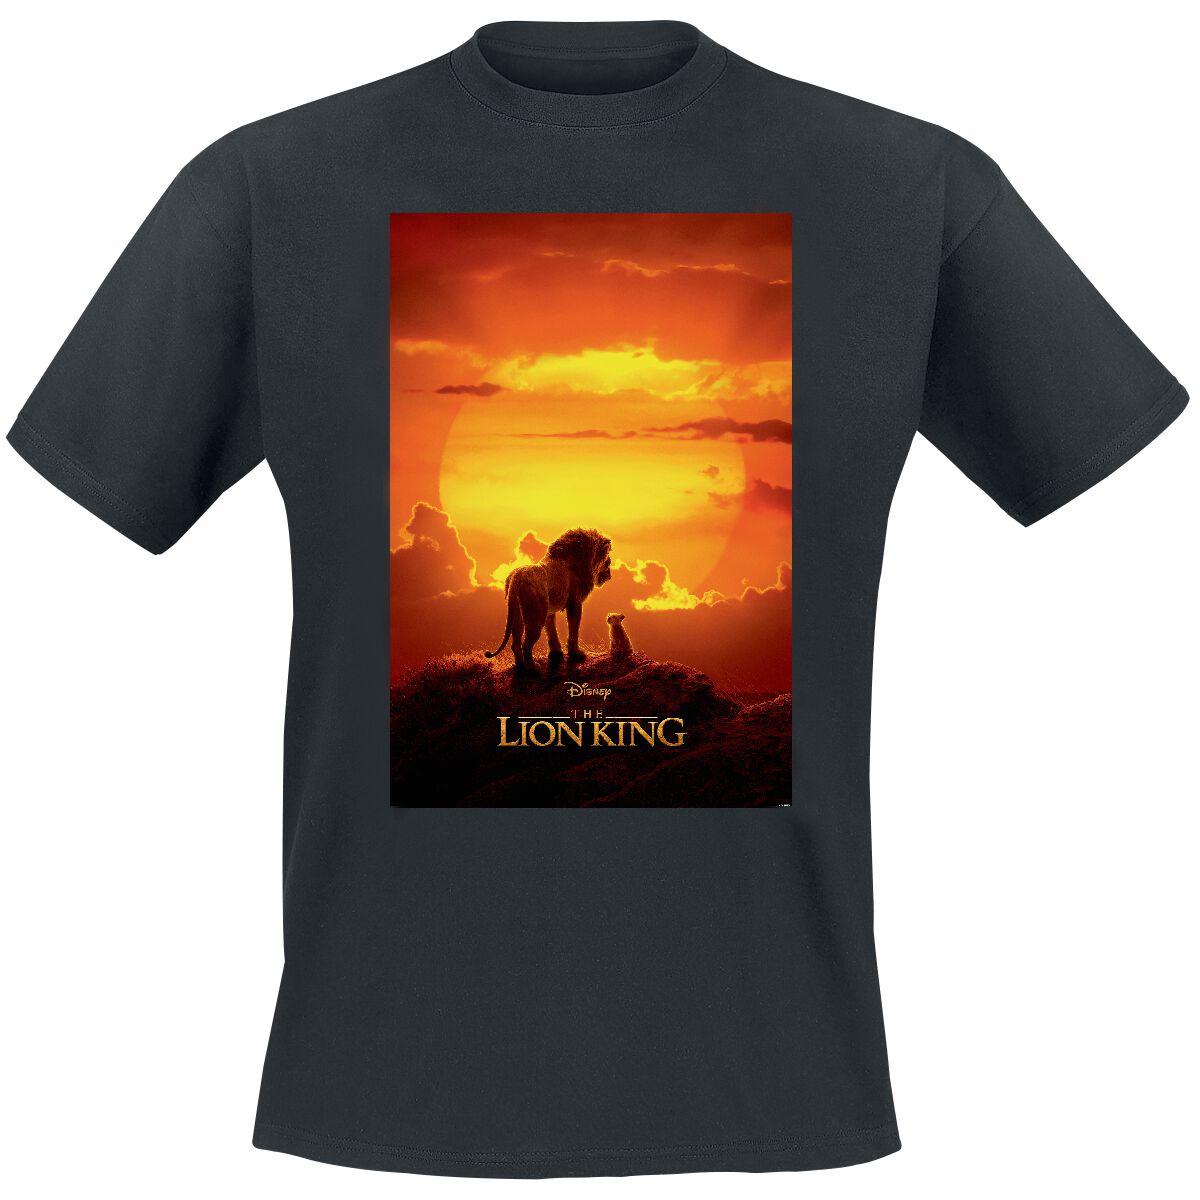 The Lion King Pride Rock Poster T-Shirt black